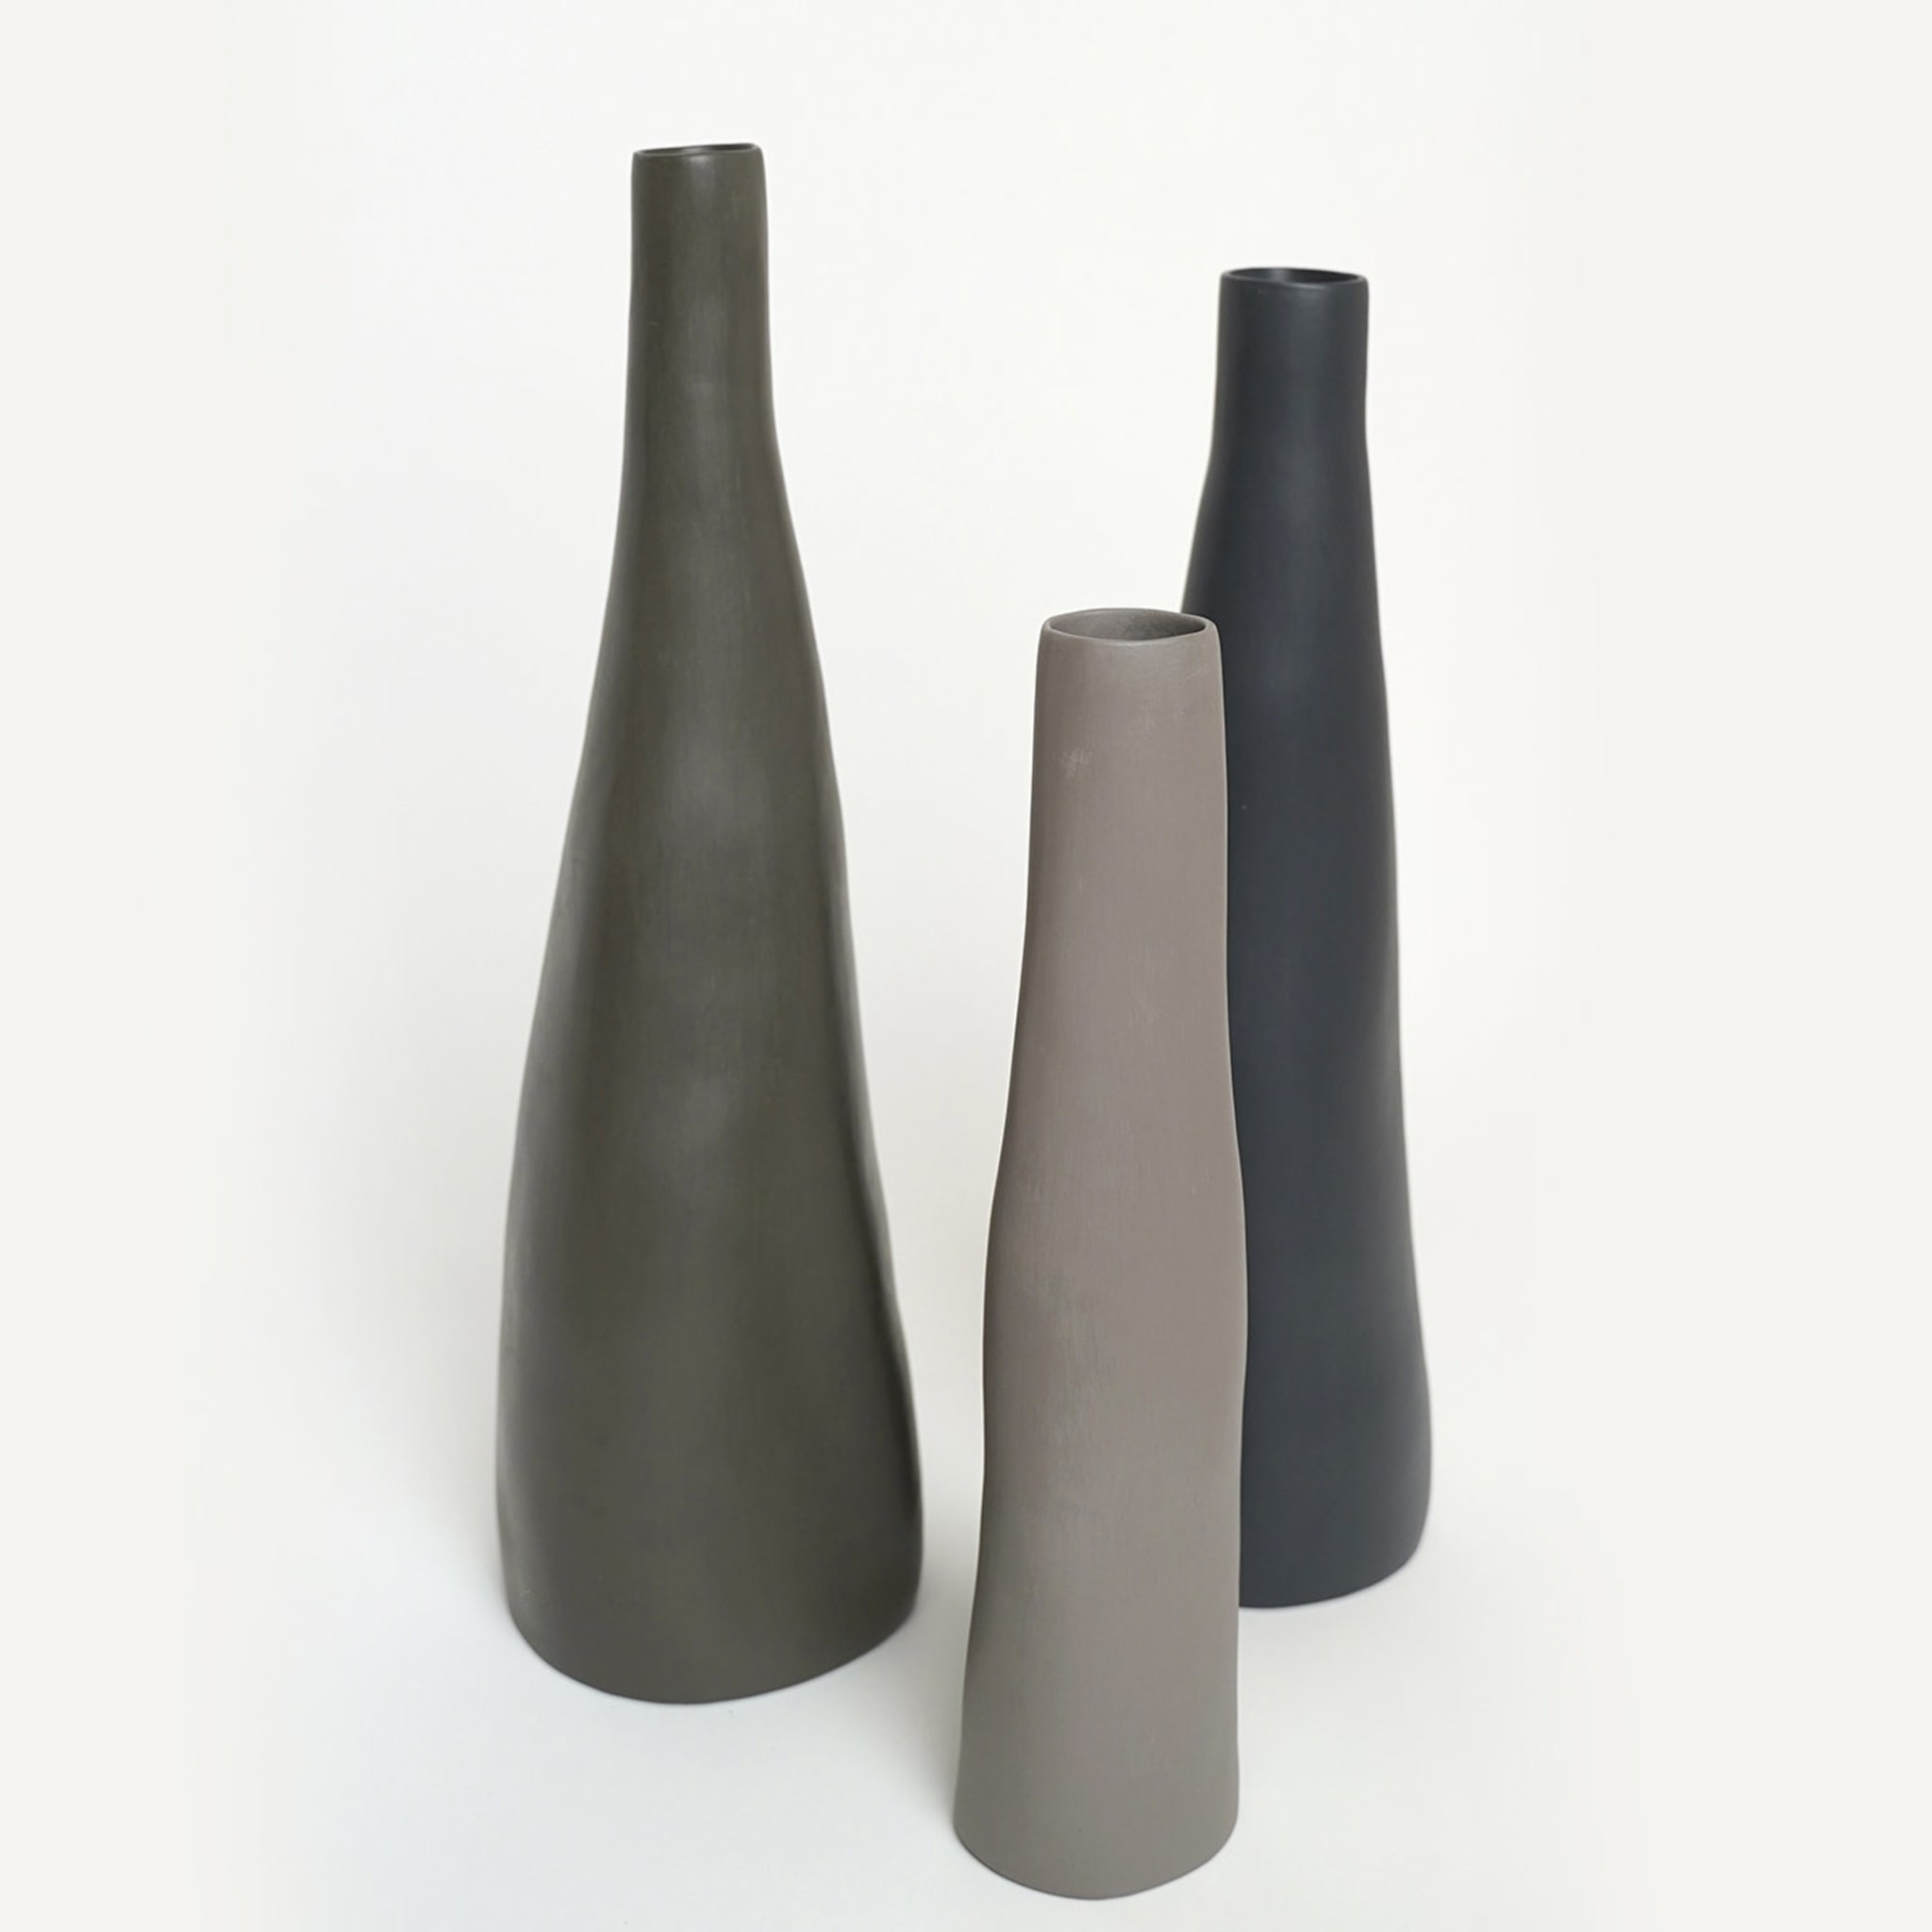 Onda Set of 3 Tall Vases - Alternative view 3